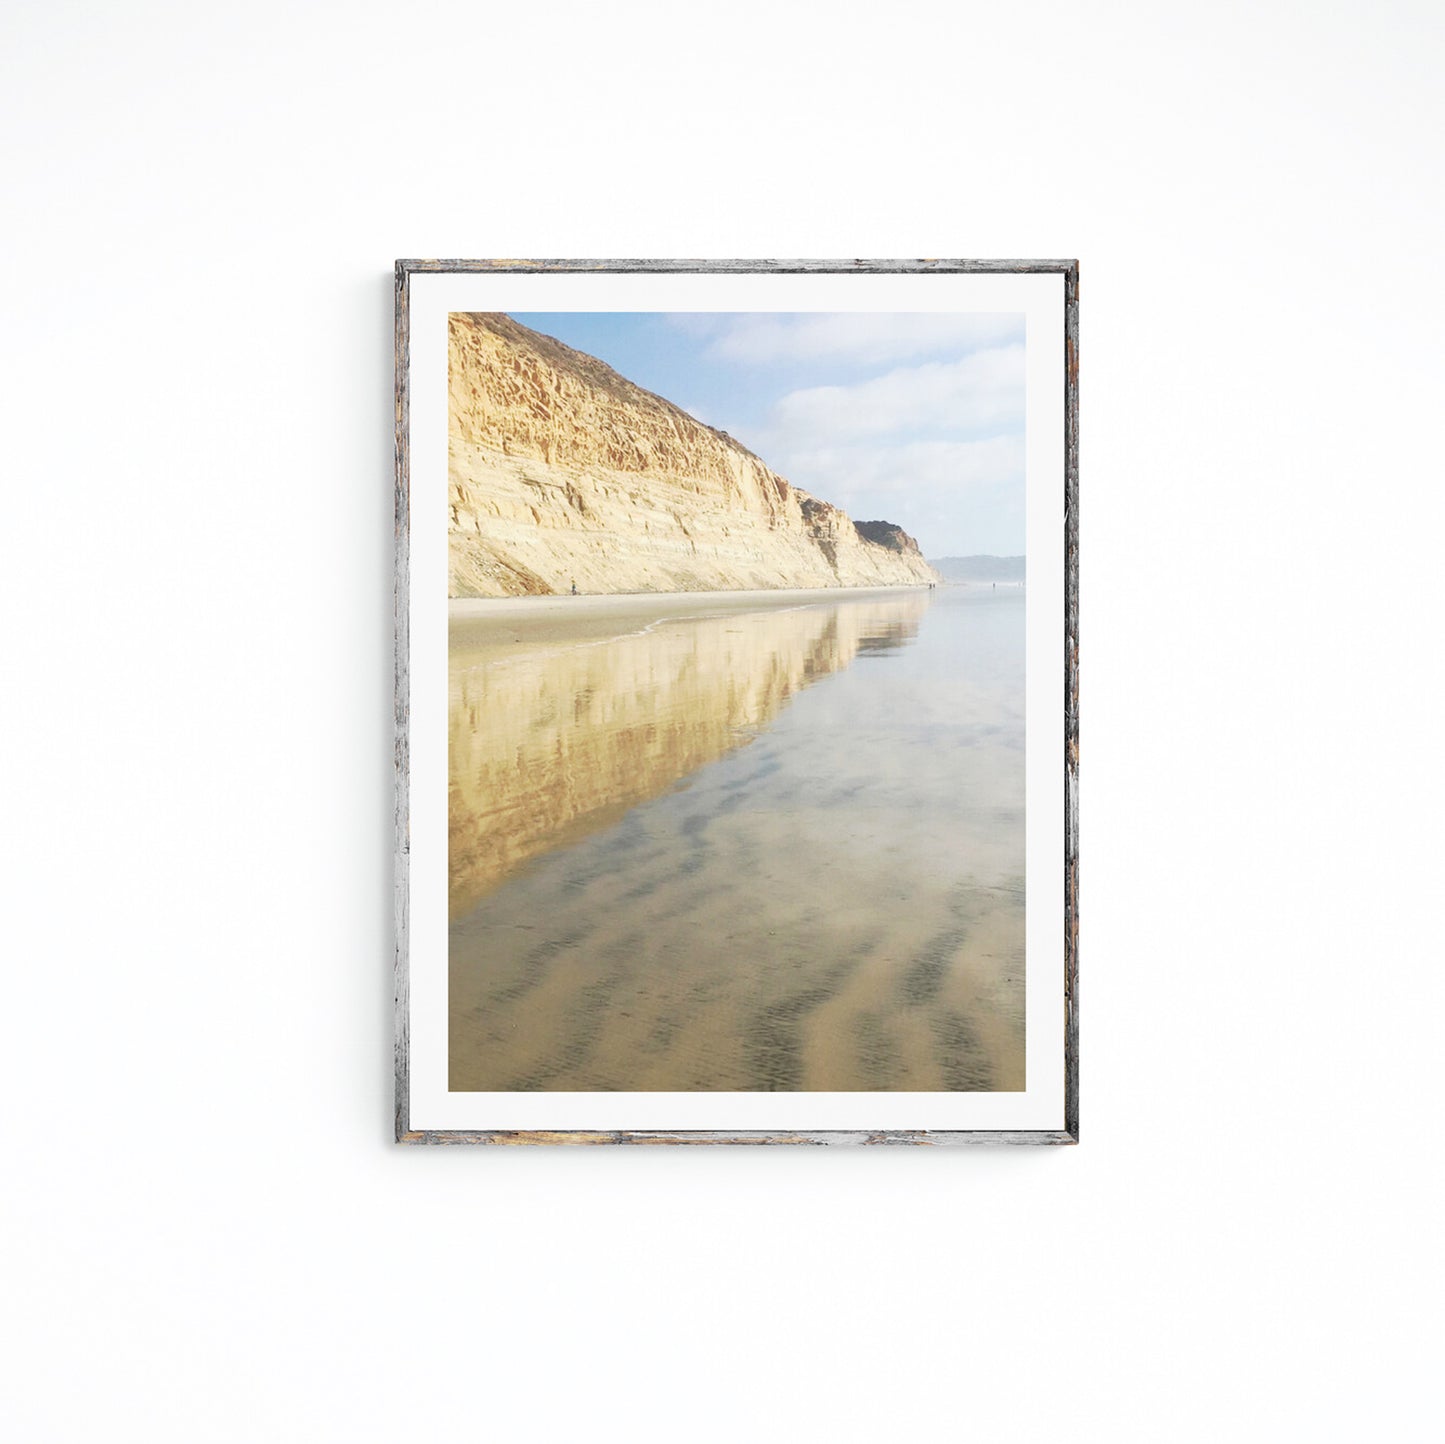 Reflections Print, La Jolla Cliffs, Original Archival Photography